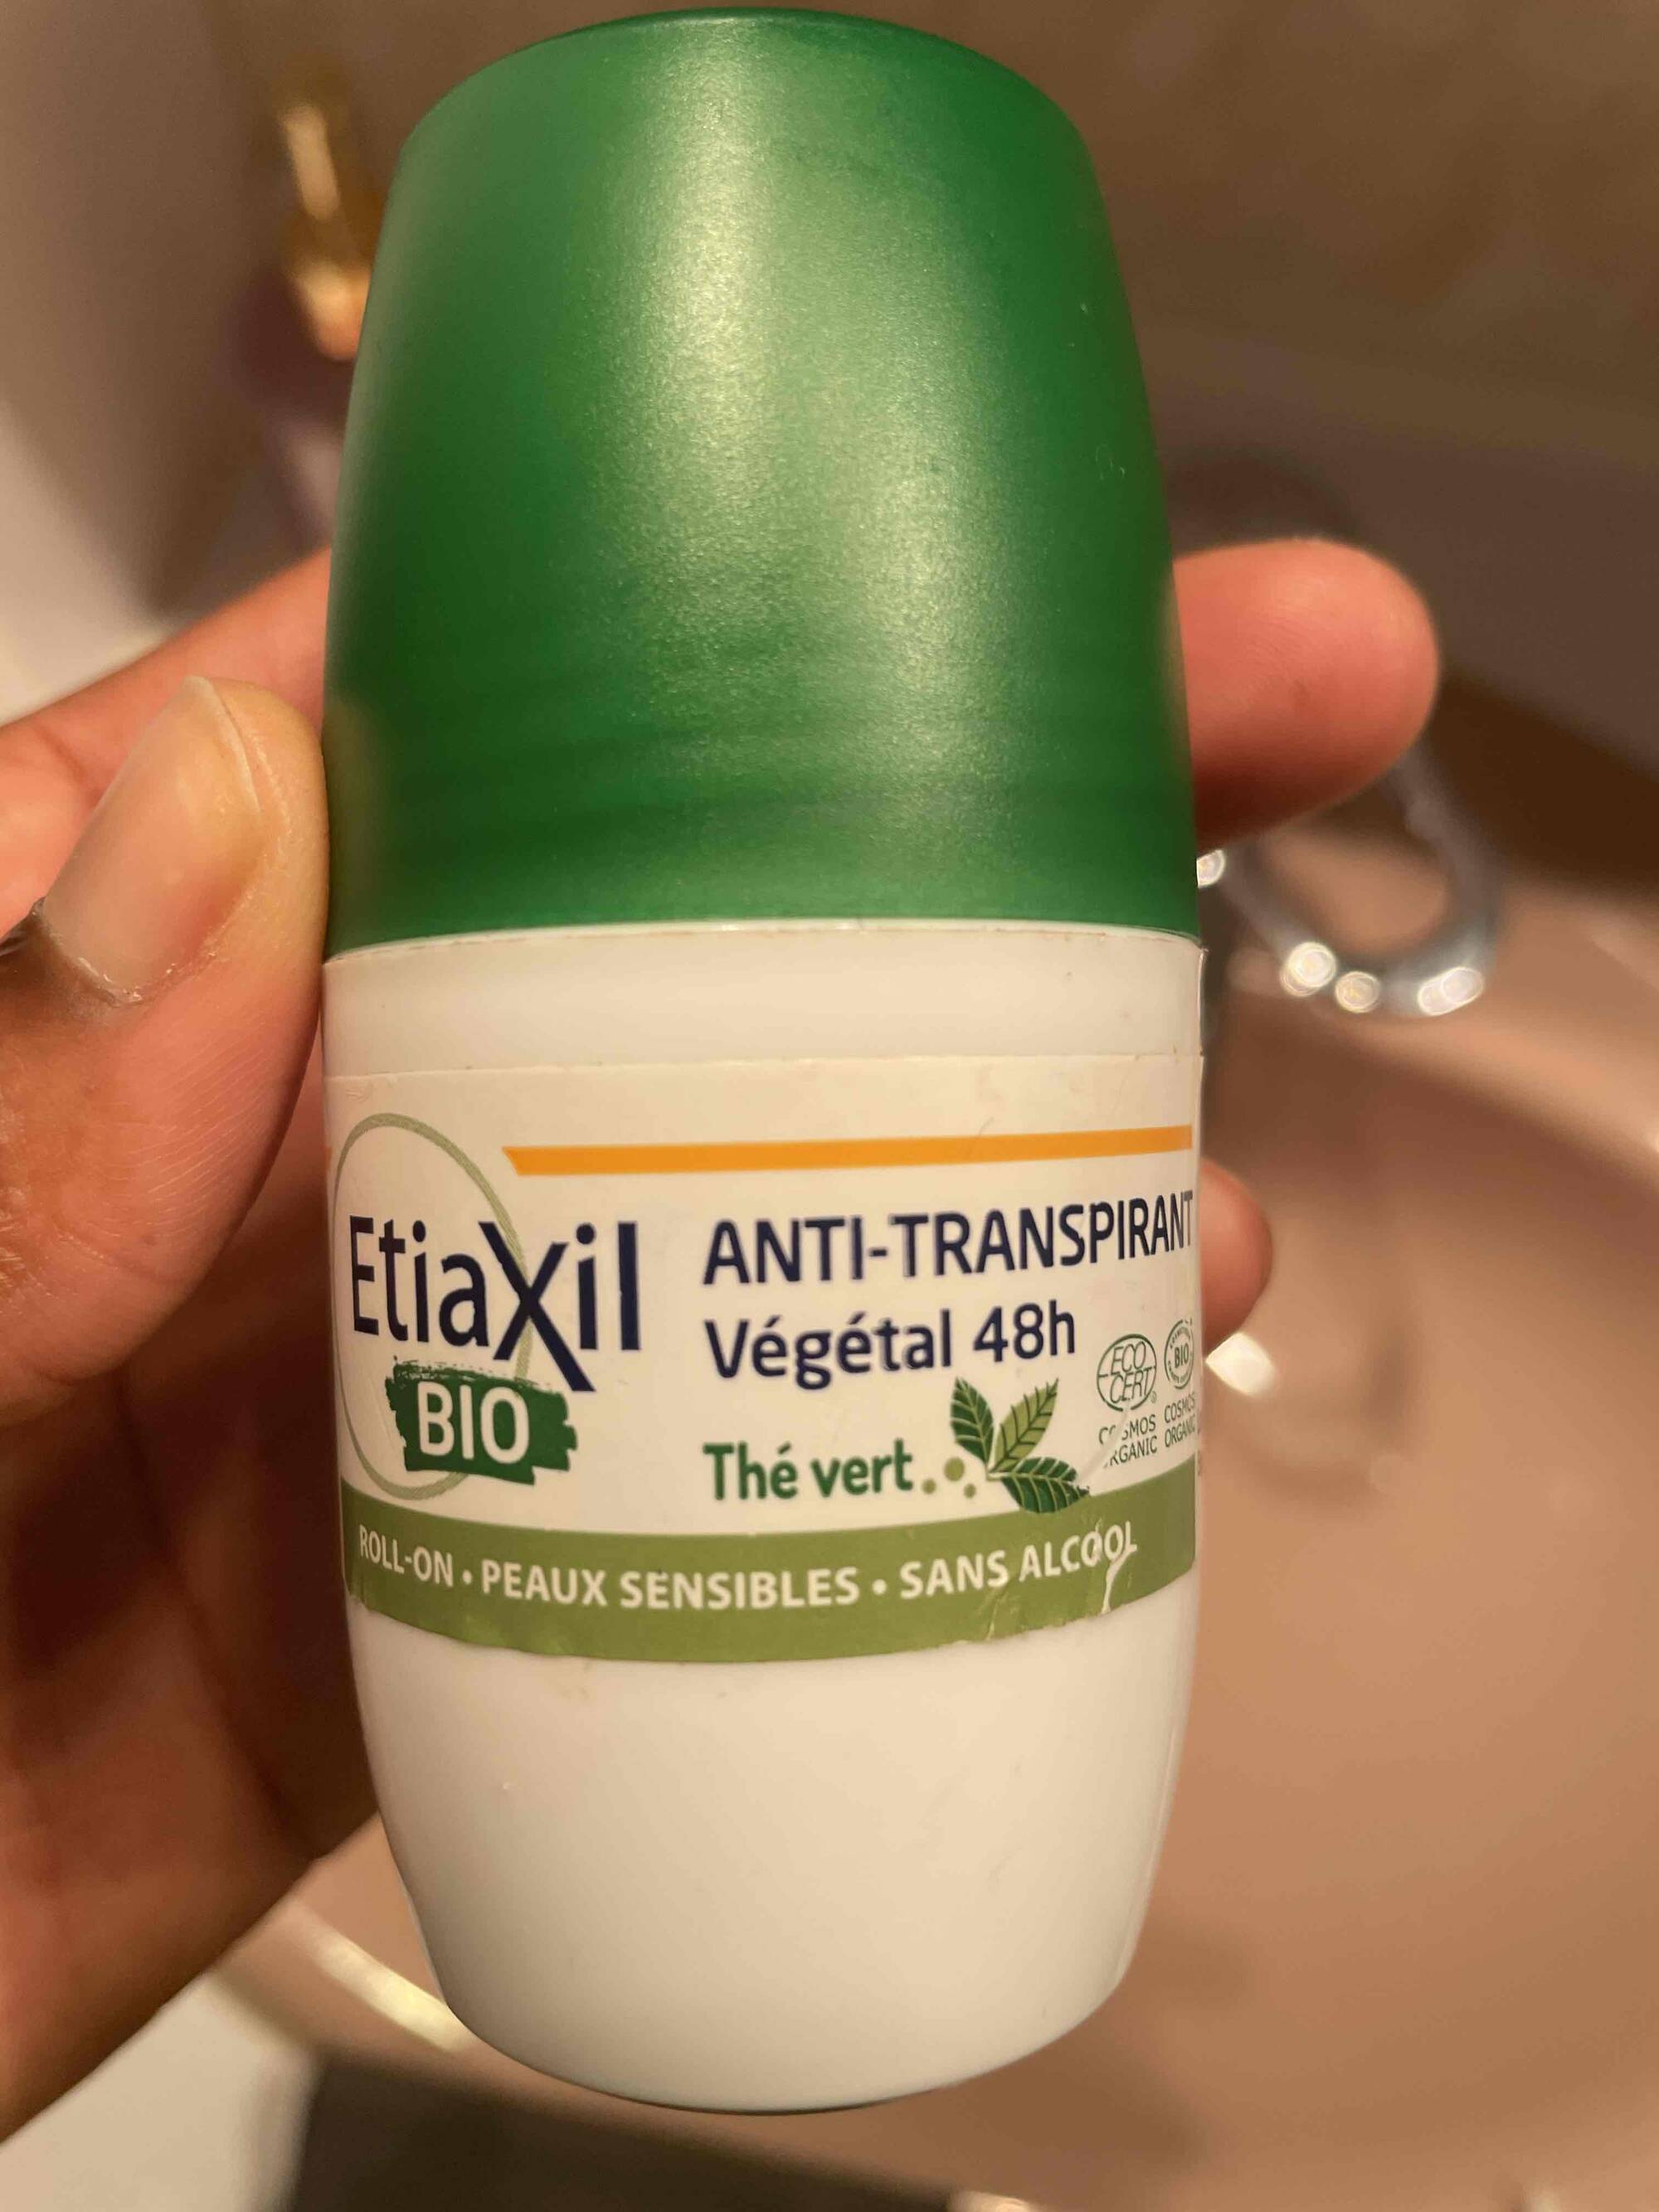 ETIAXIL - Thé vert - Anti-transpirant vegetal bio 48h